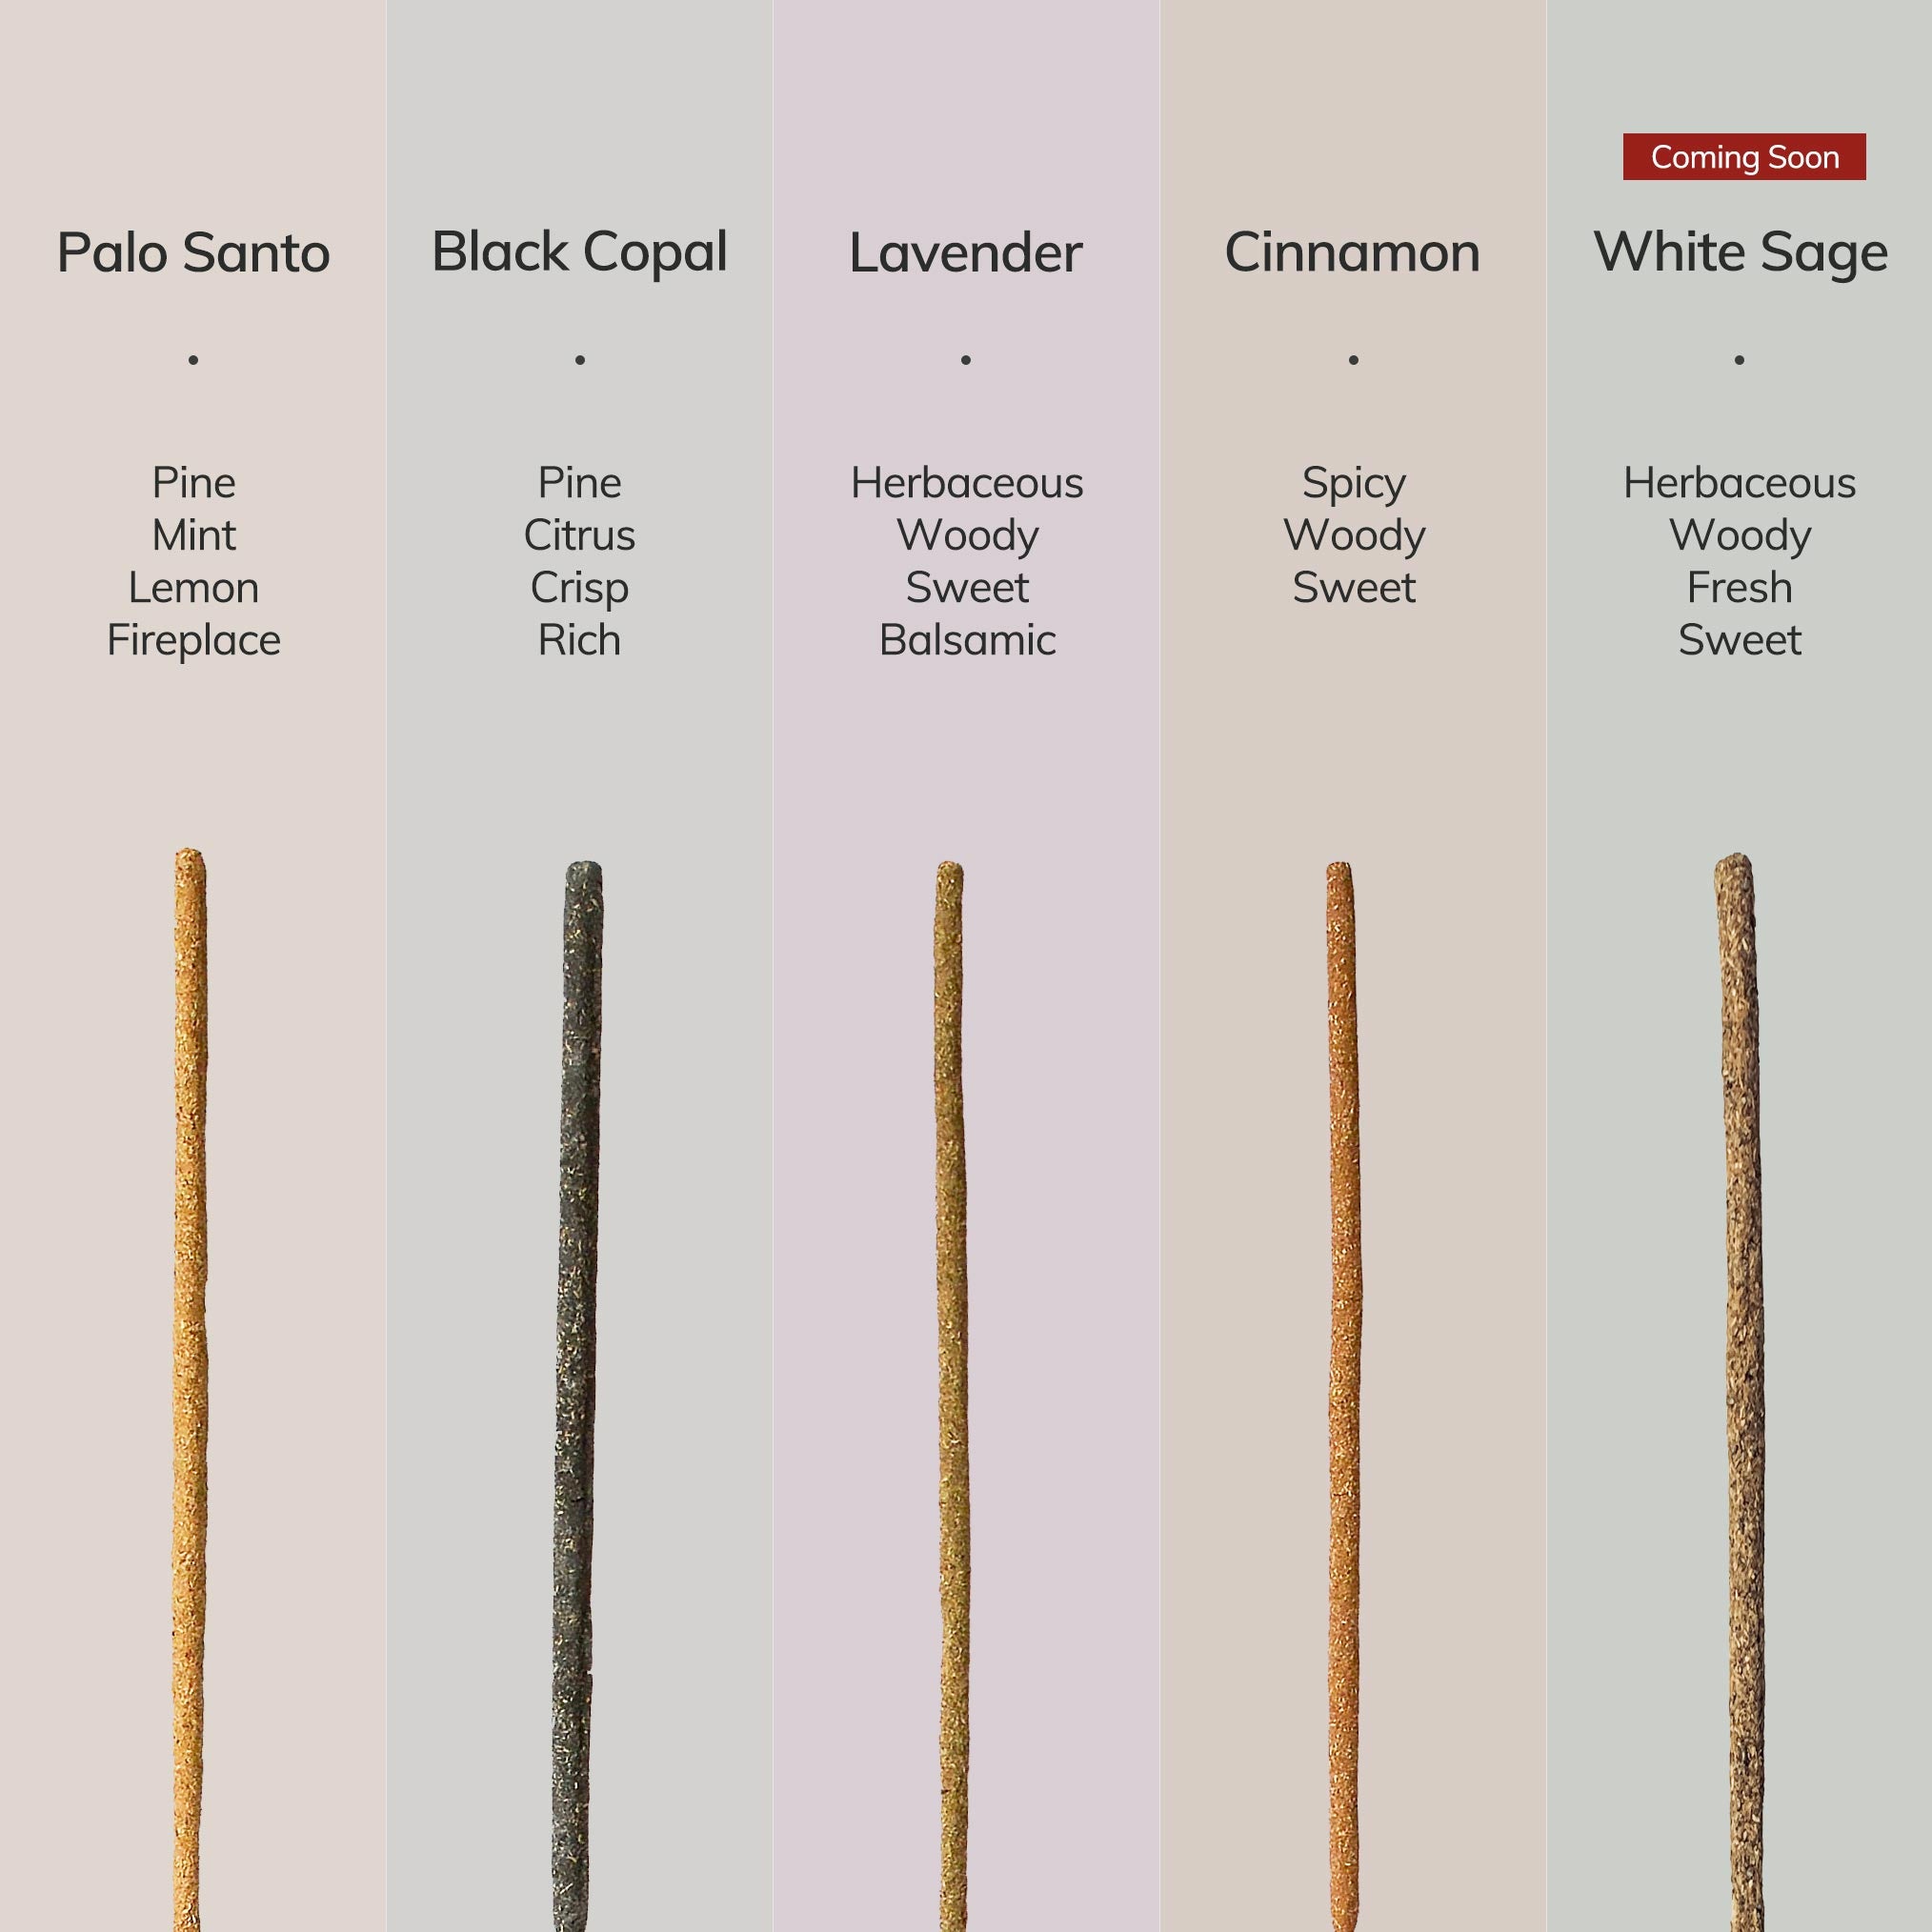 5 types of incense sticks and the scent: Palo Santo, Black Copal, Lavender, Cinnamon, White Sage.